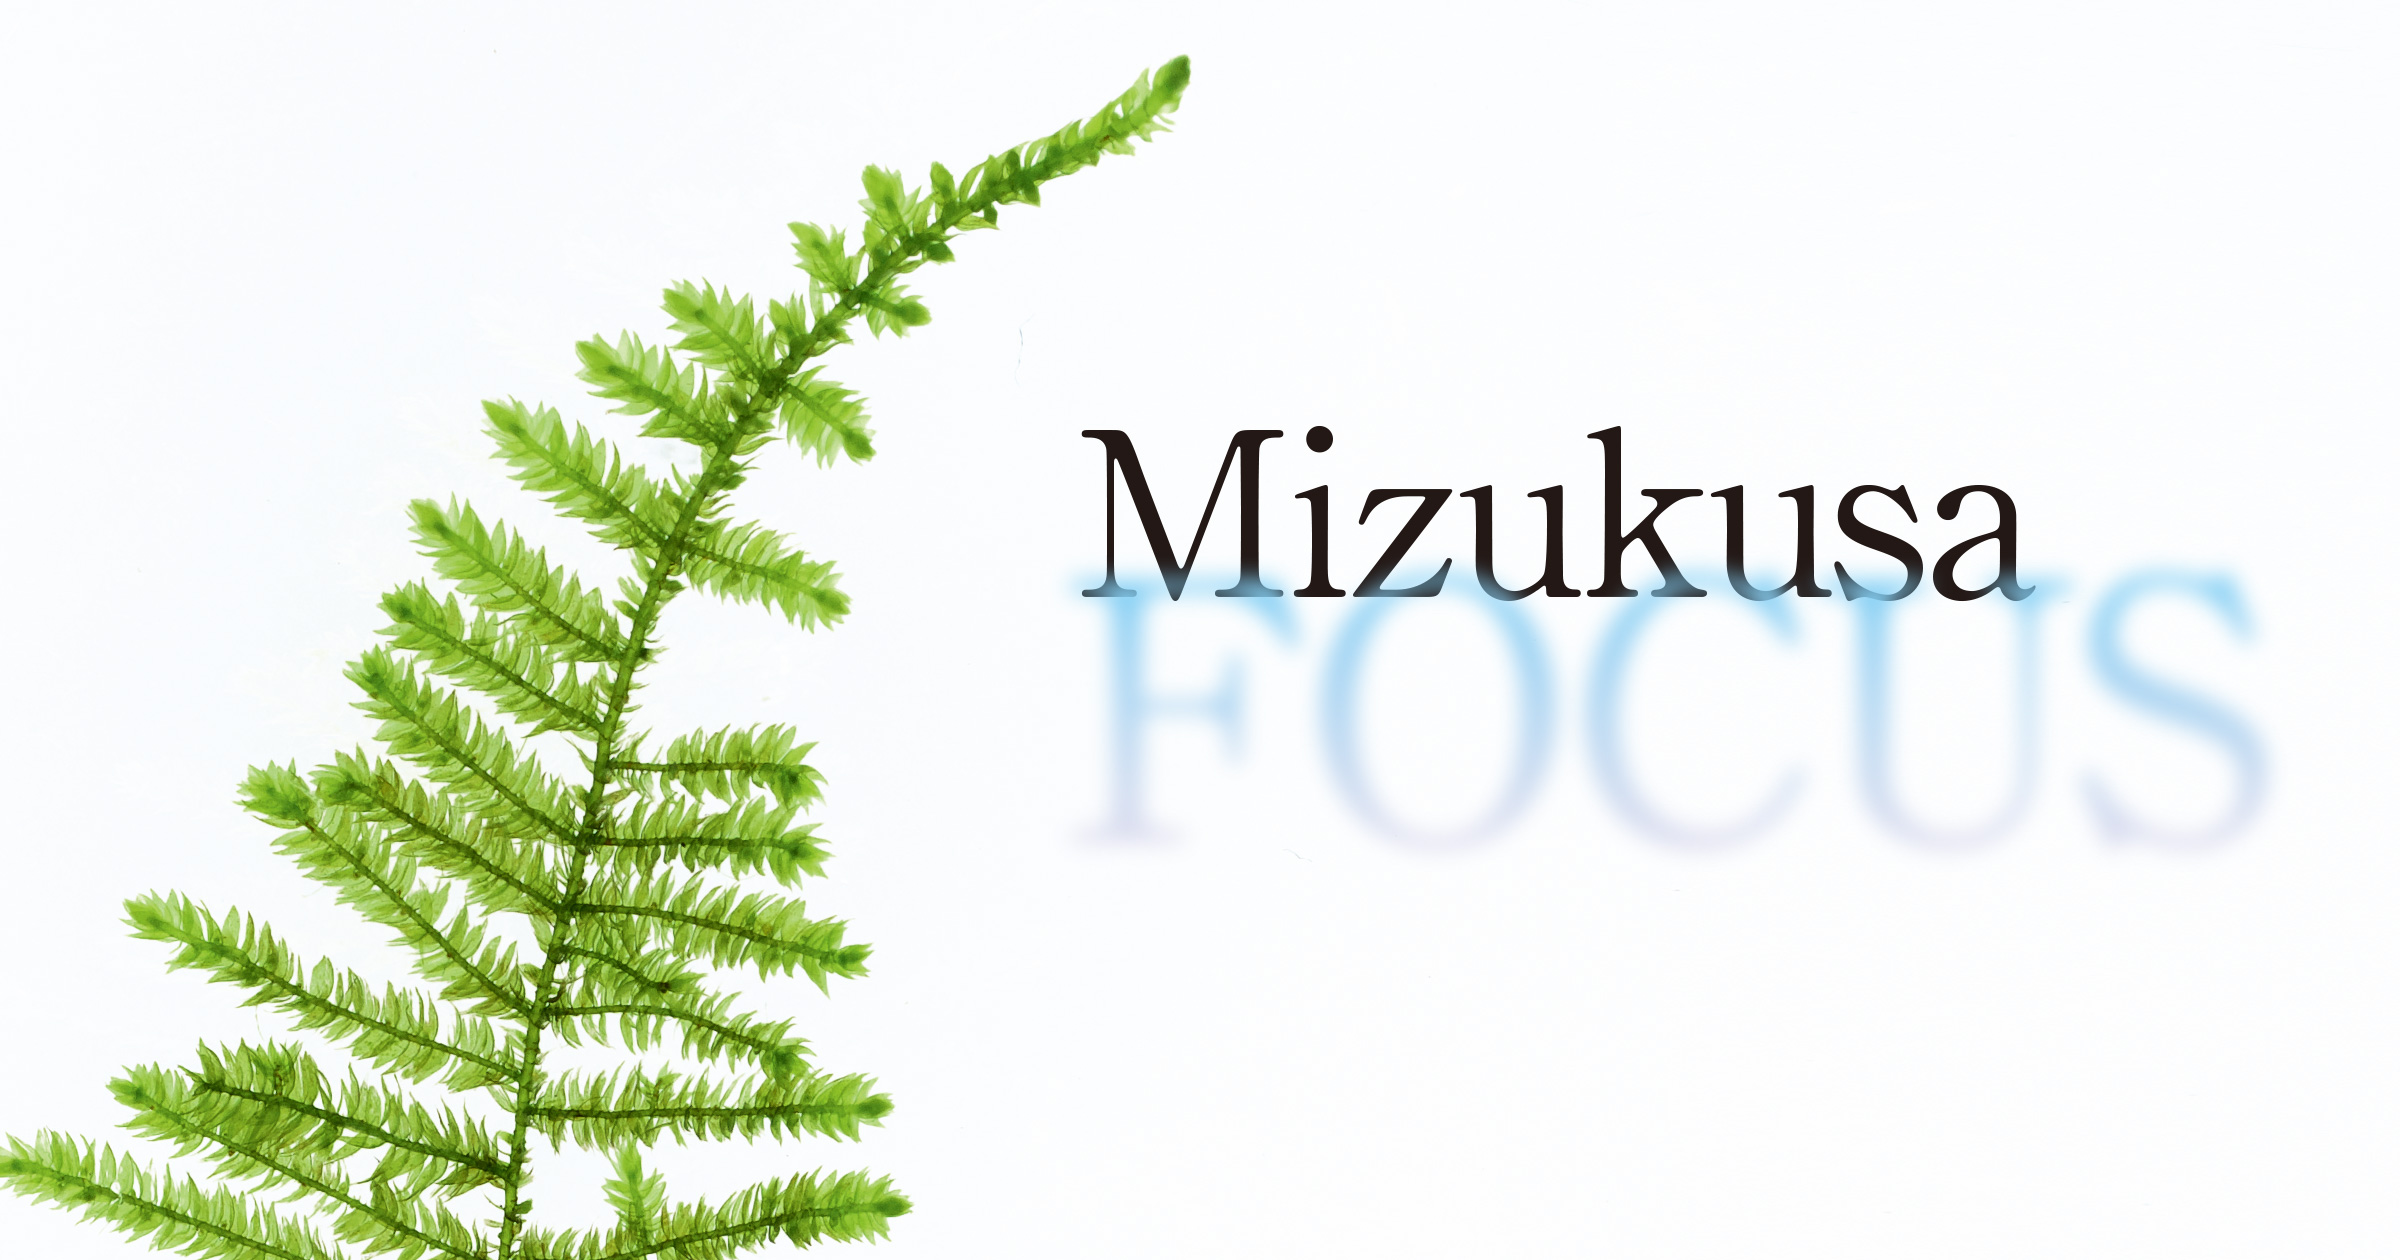 Mizukusa FOCUS “Peacock Moss and Christmas Moss”